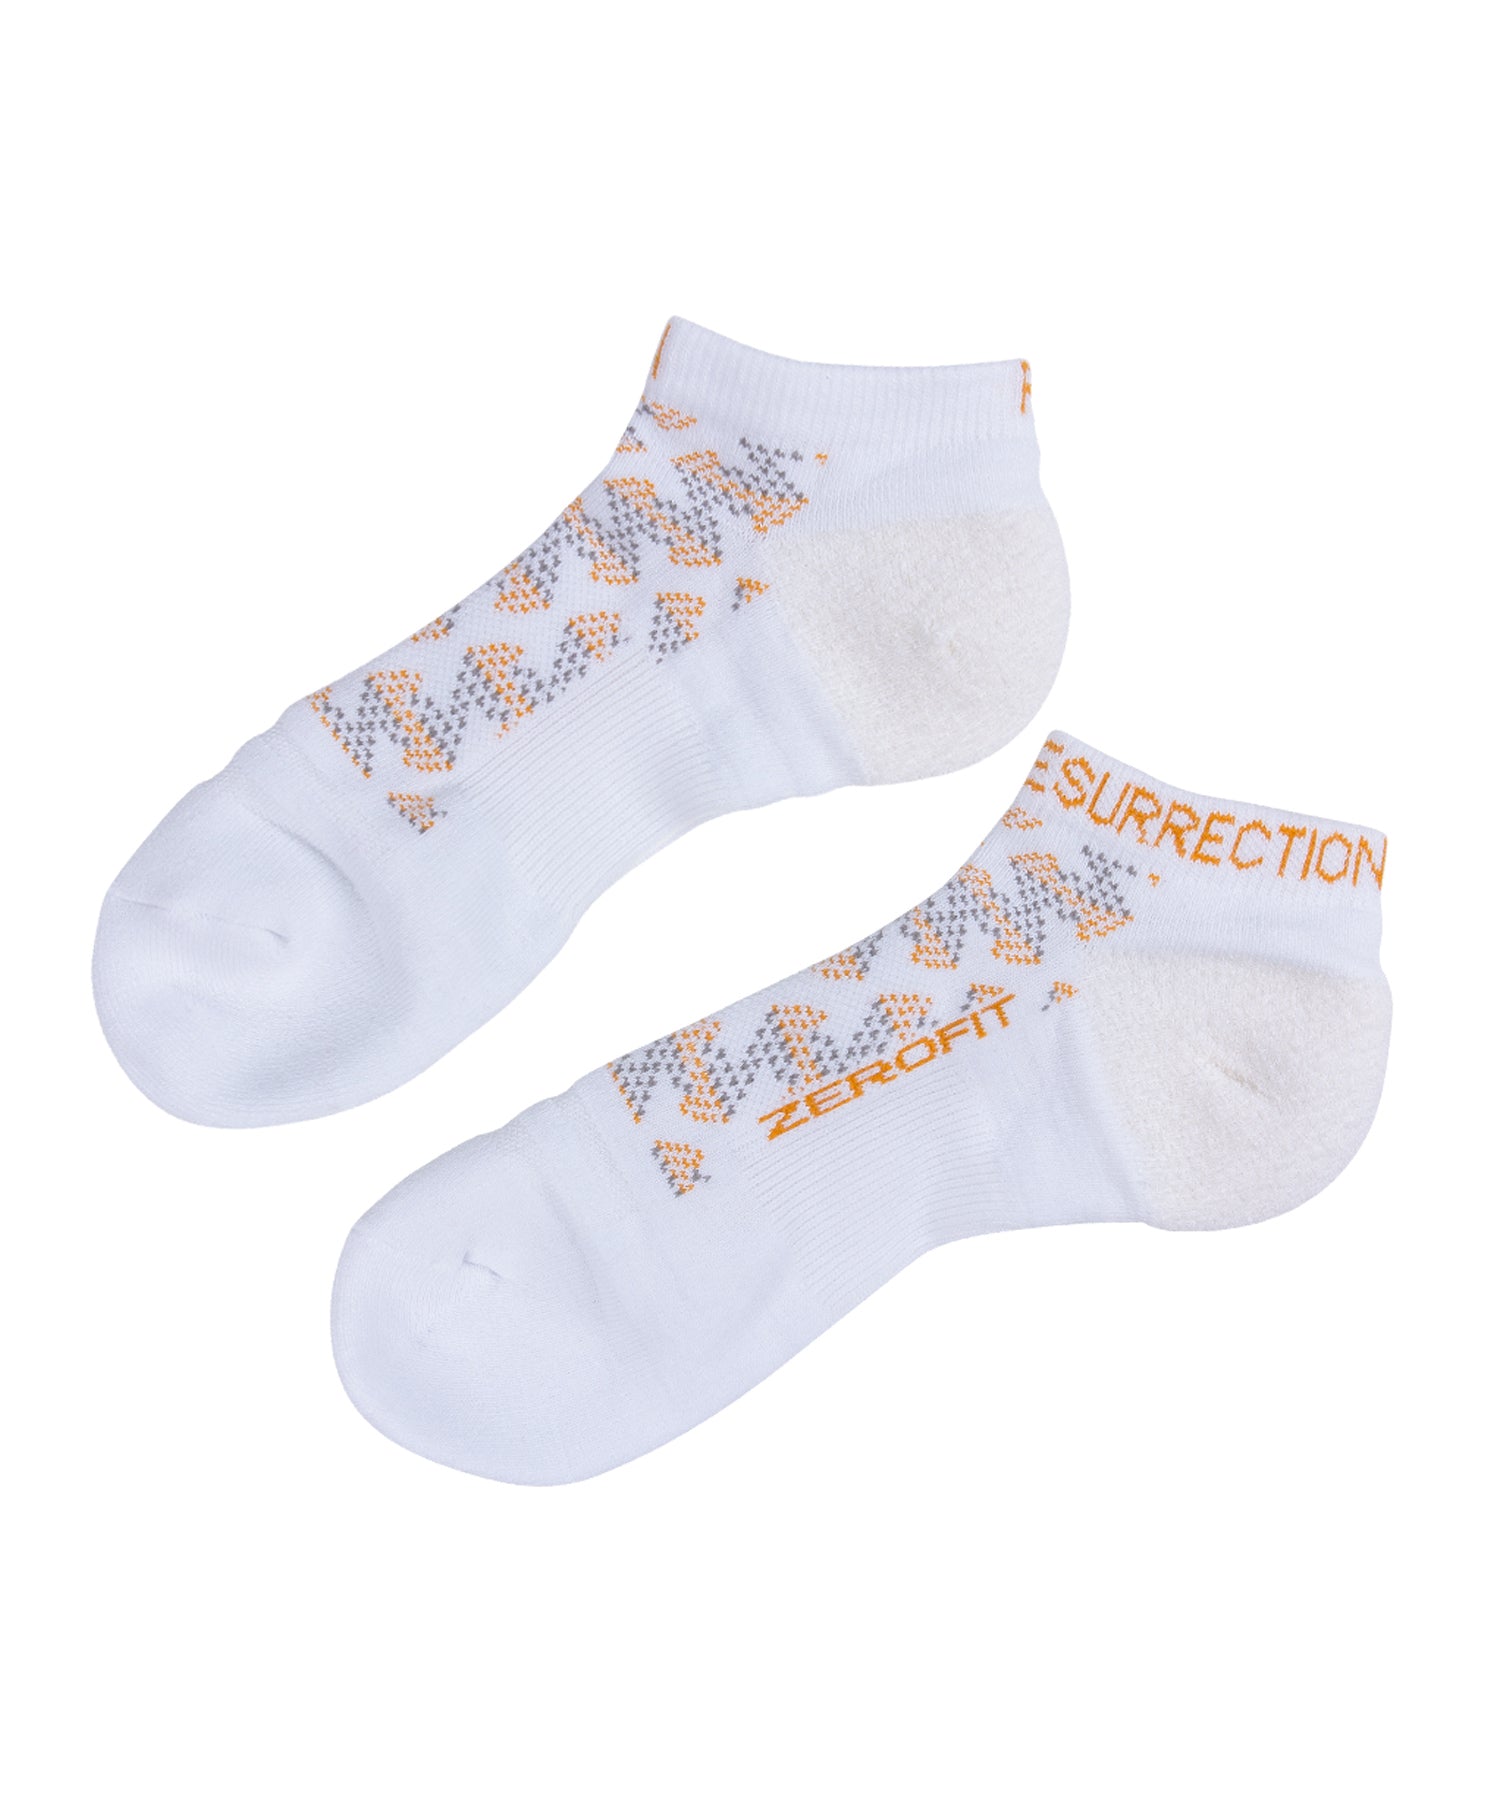 [Resurrection collaboration] Ankle socks